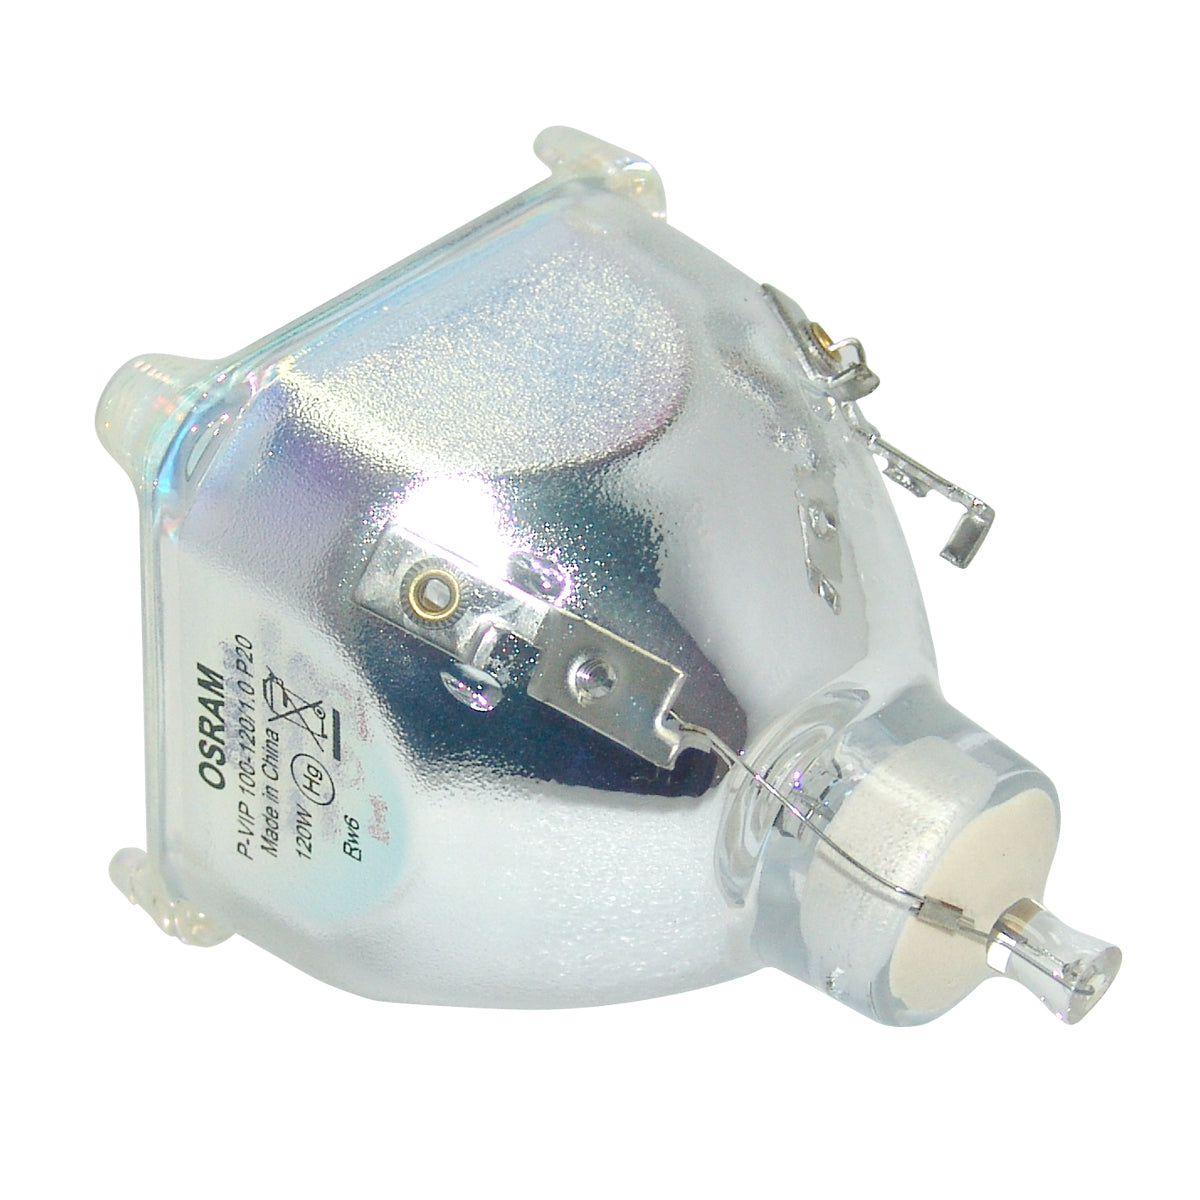 Dukane 456-243 Osram Projector Bare Lamp